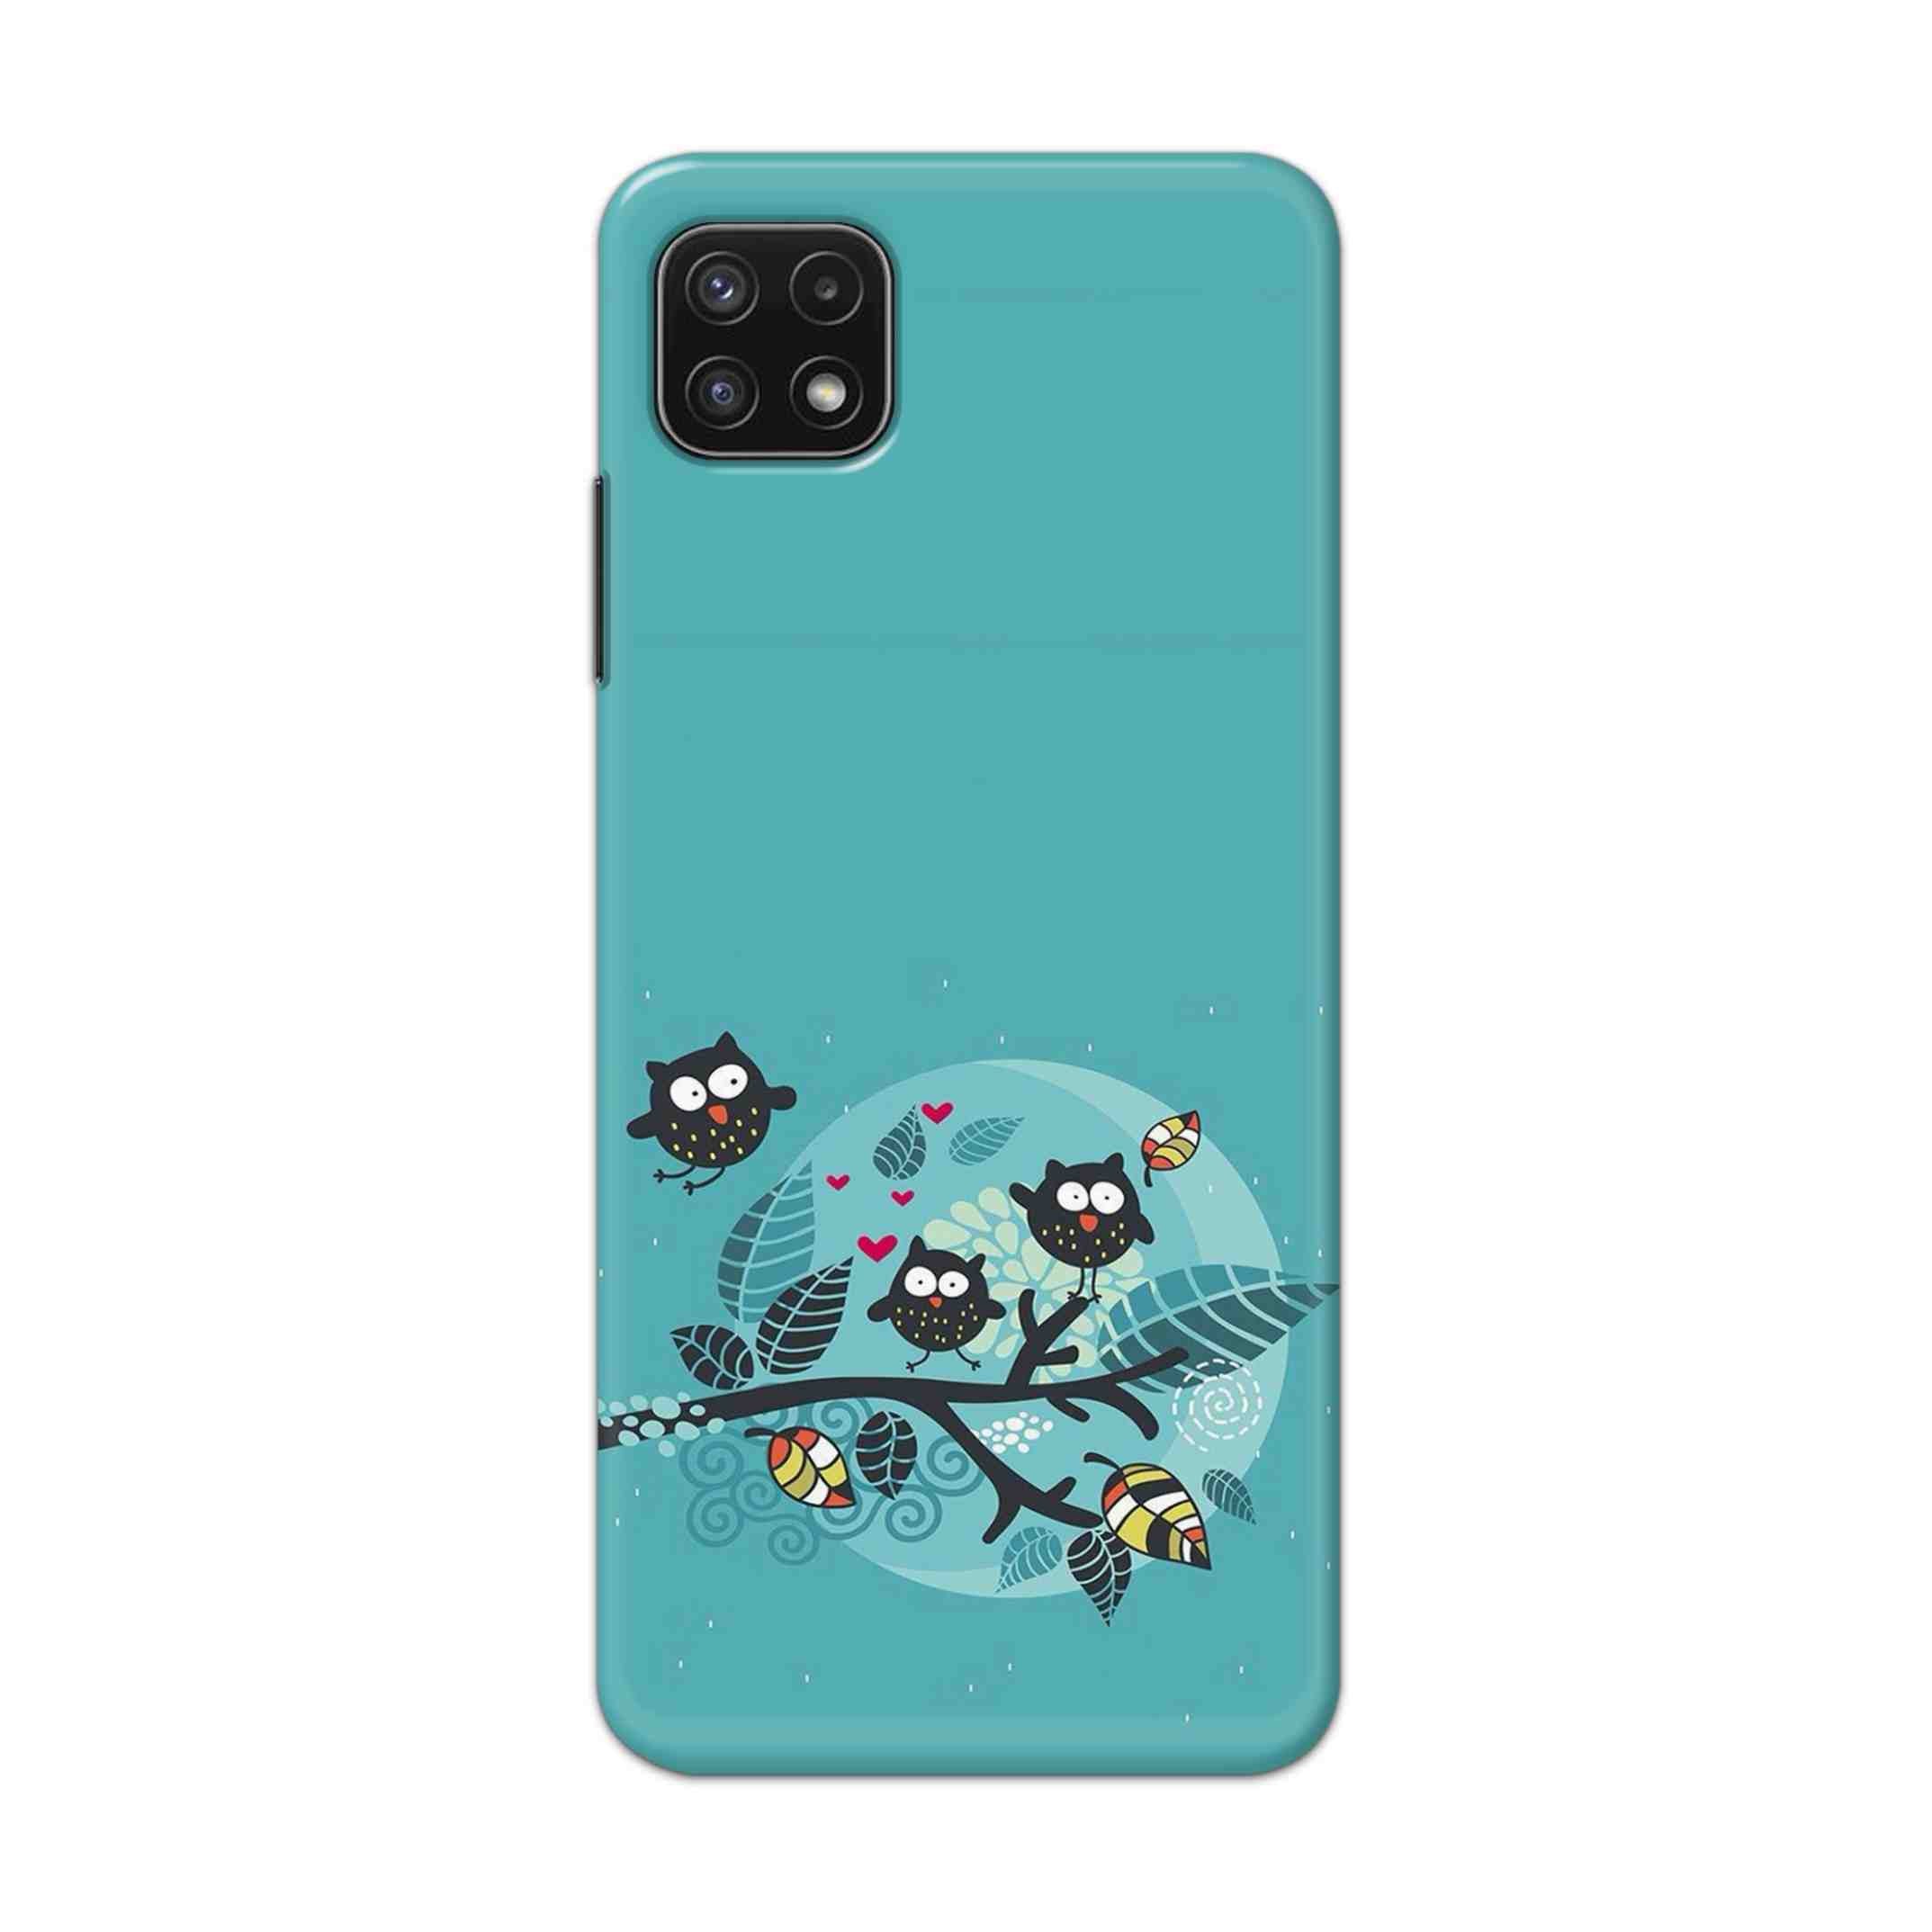 Buy Owl Hard Back Mobile Phone Case Cover For Samsung A22 5G Online